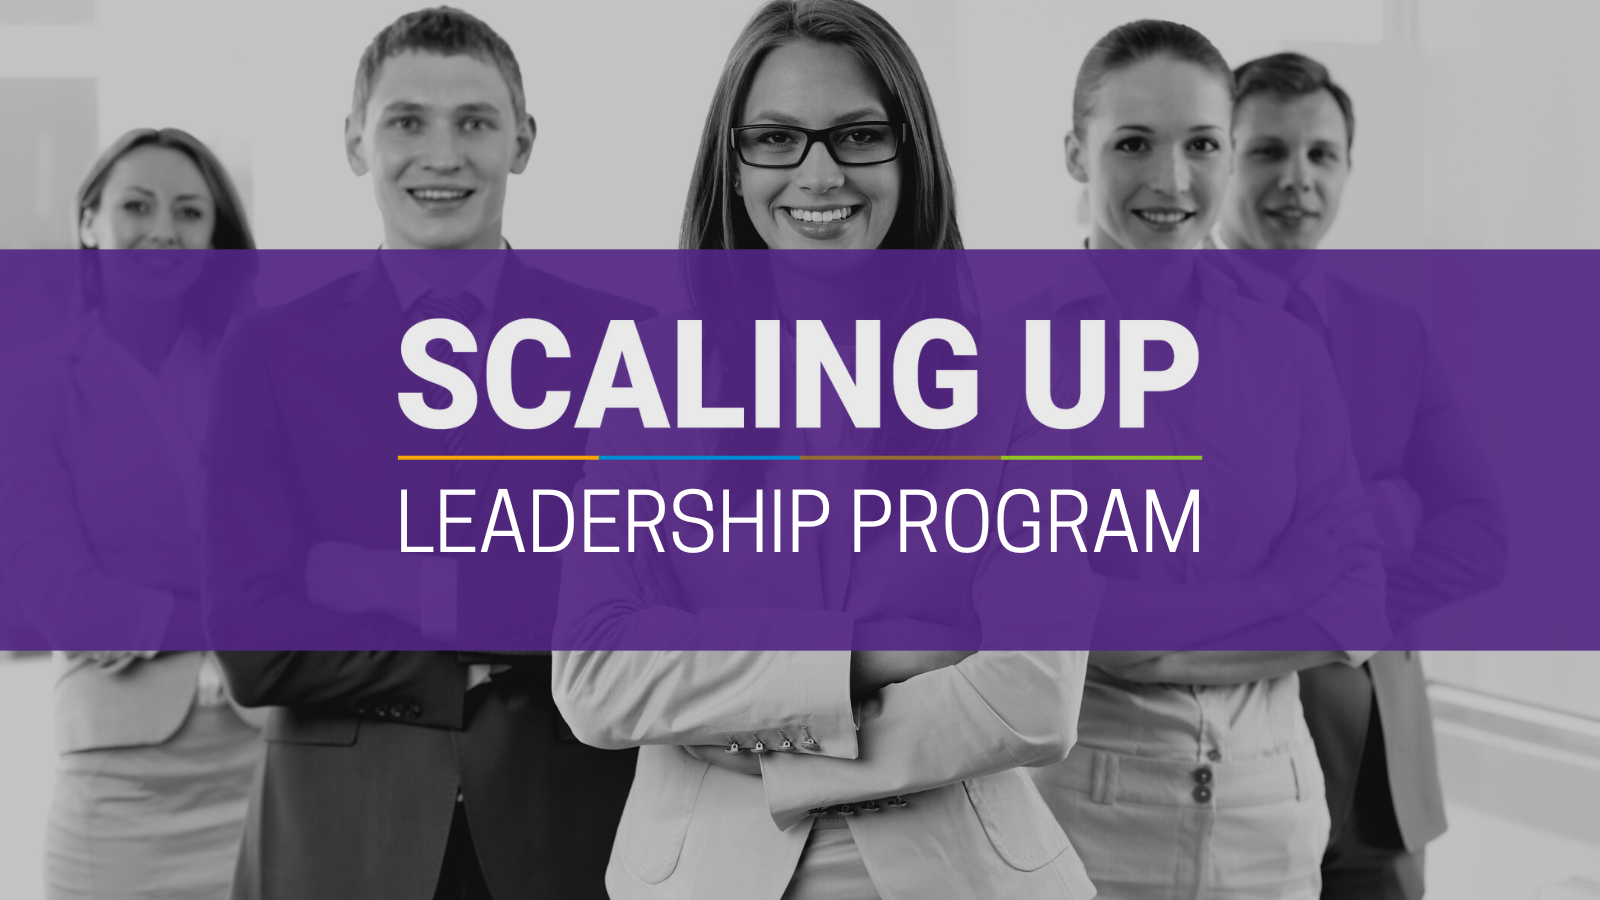 ScalingUp - Leadership Program Banner